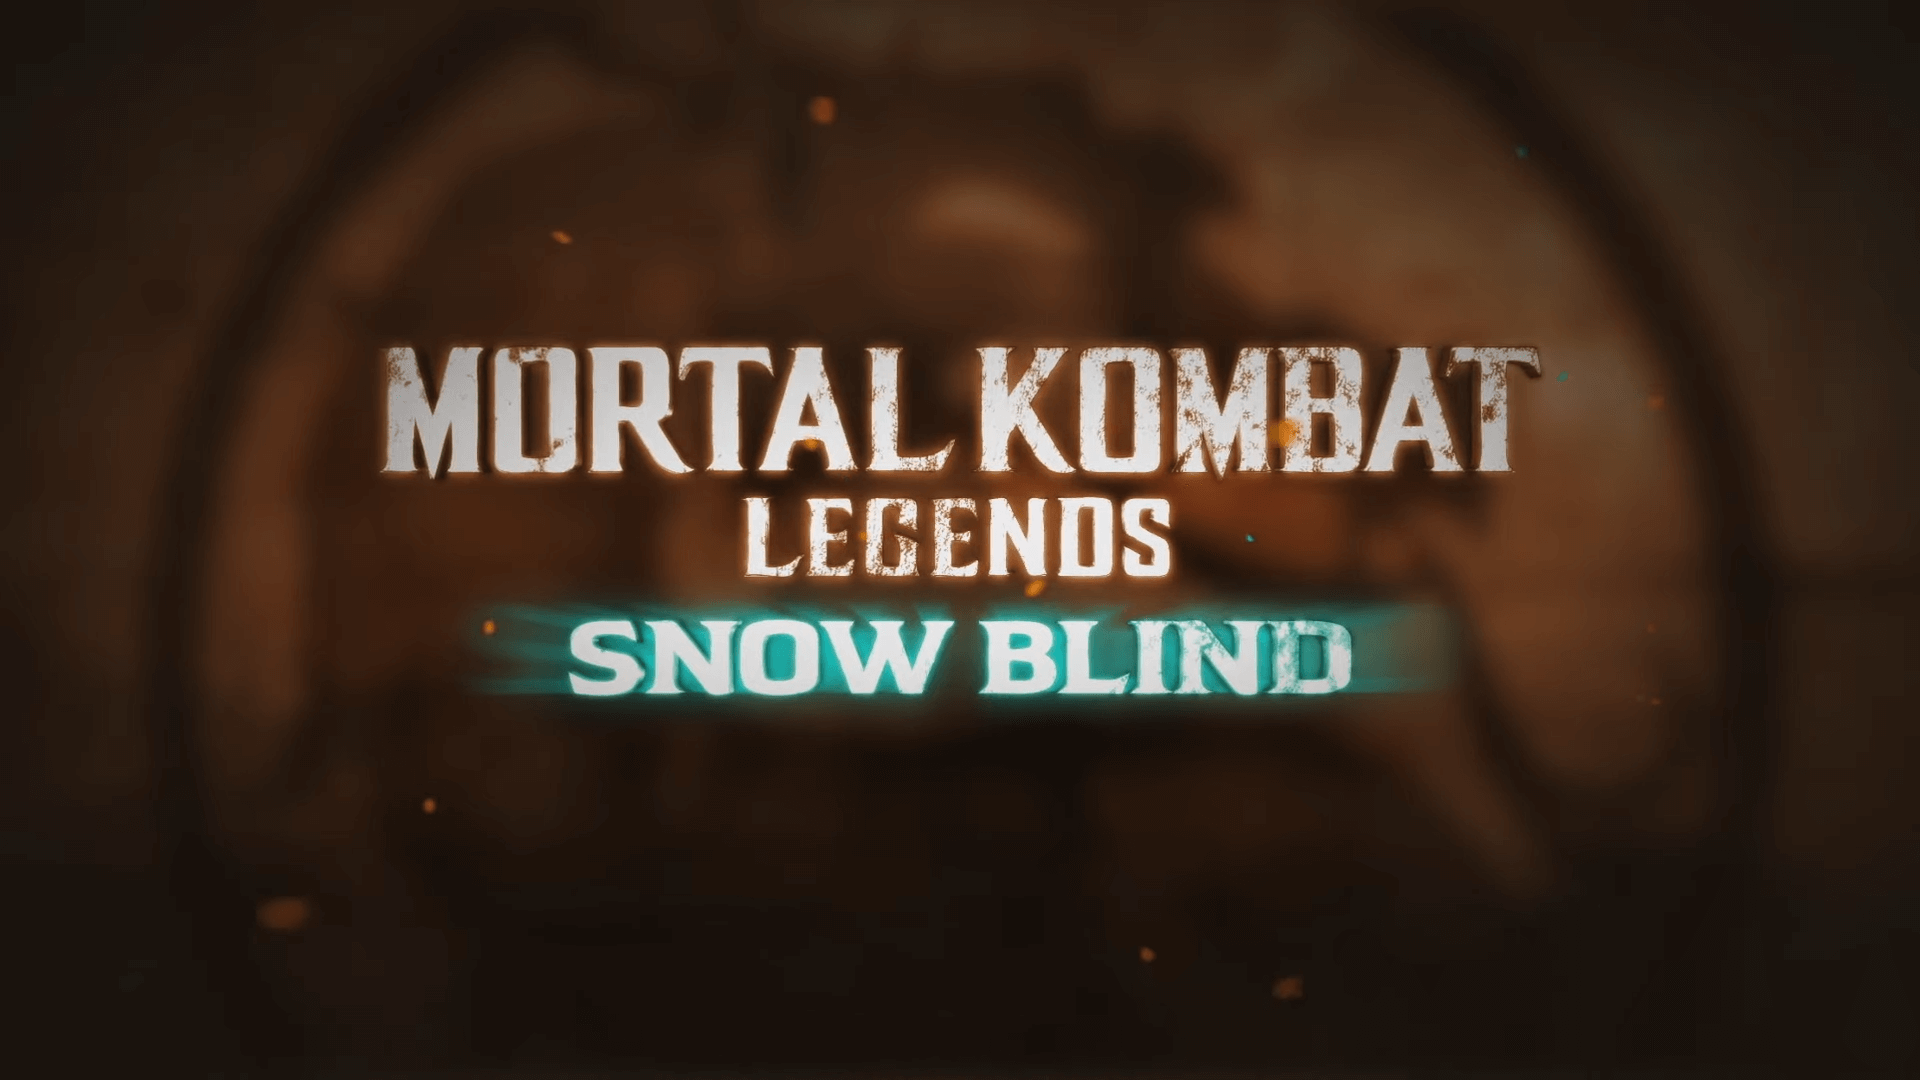 A new Mortal Kombat Legends series announced focusing on Kenshi